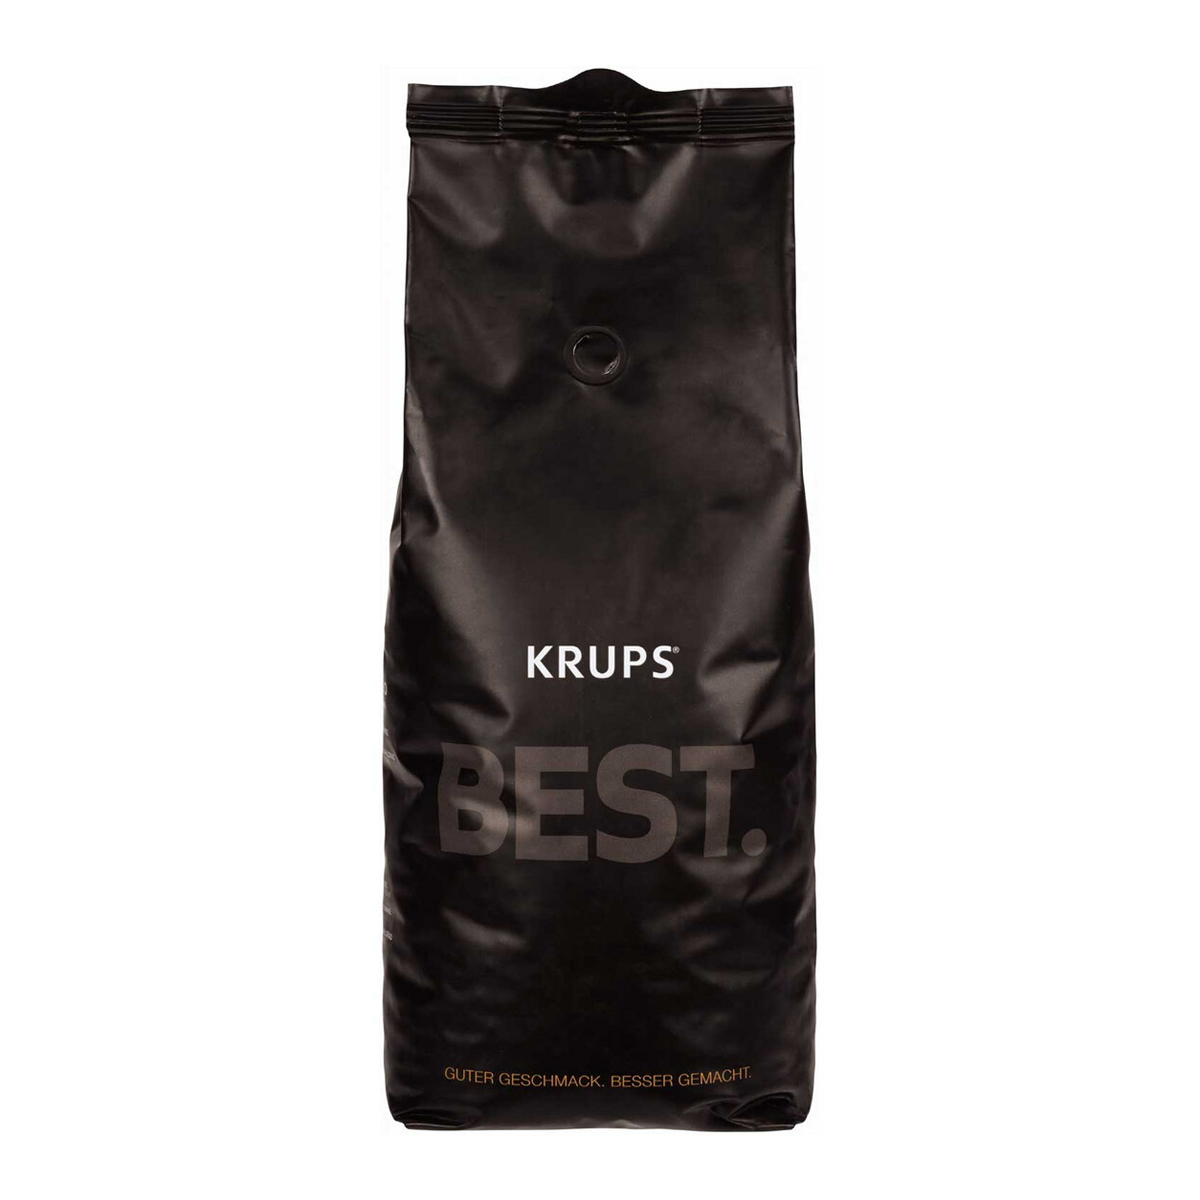 Krups Kaffeebohnen Best Espresso-Kaffee 1000g, Ganze Bohnen - techniktrends